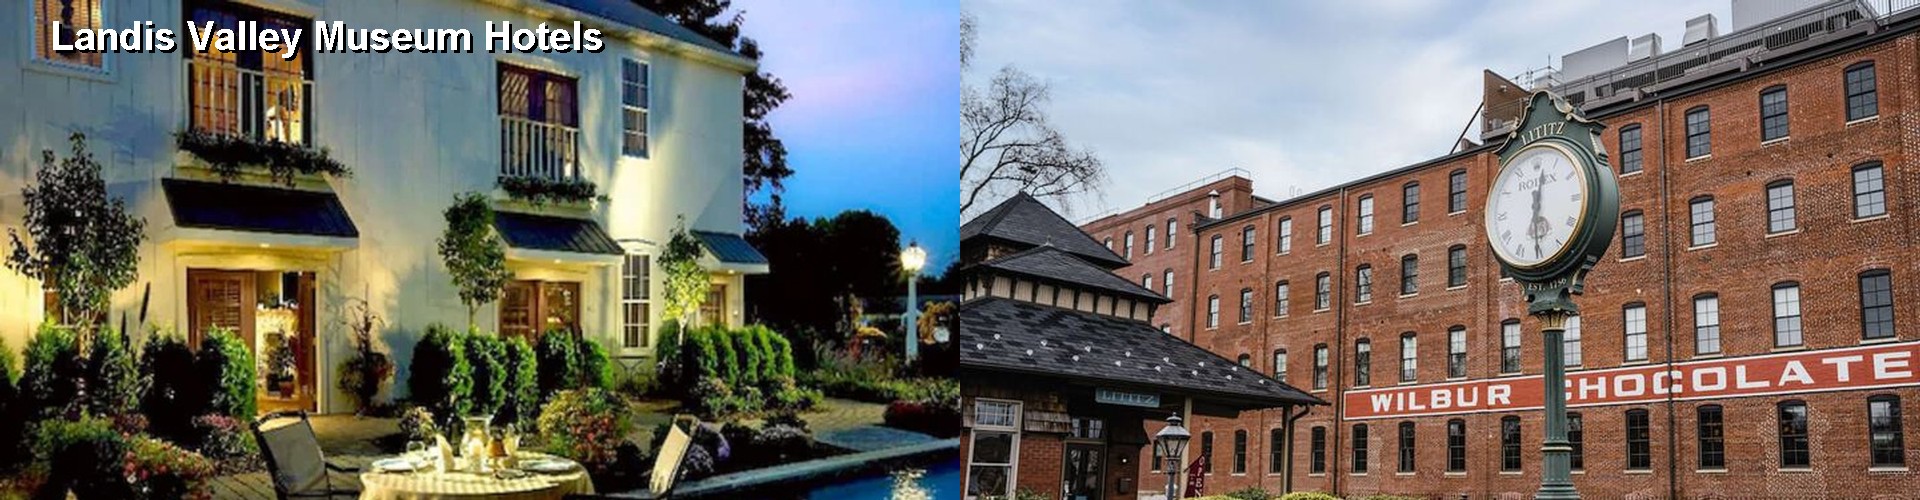 5 Best Hotels near Landis Valley Museum